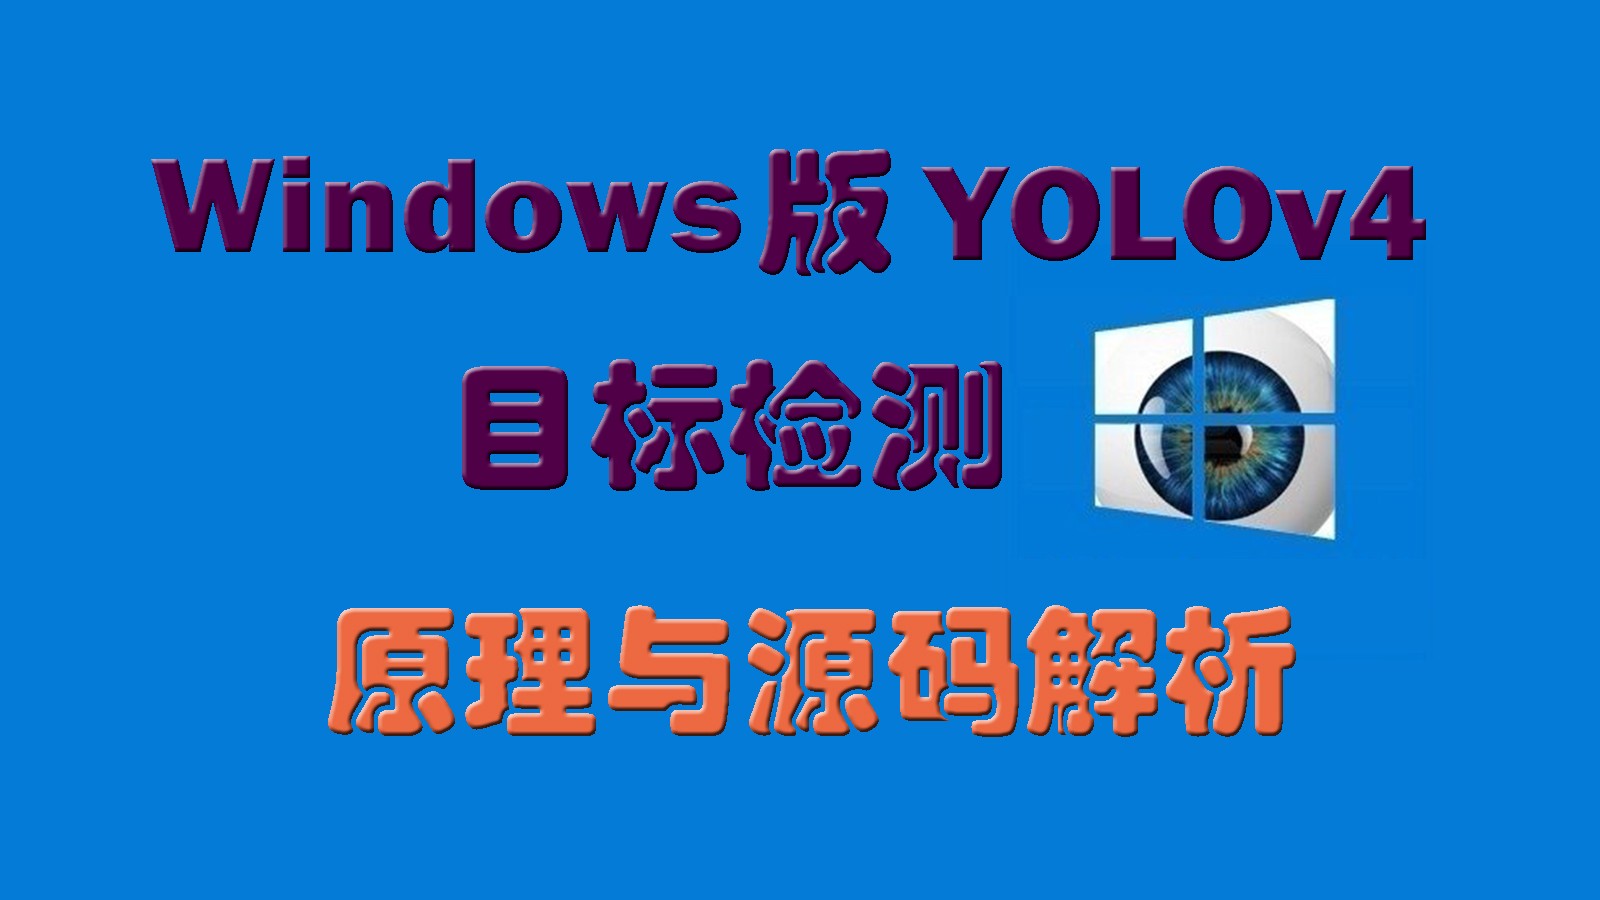  YOLOv4 target detection for Windows: principle and source code analysis